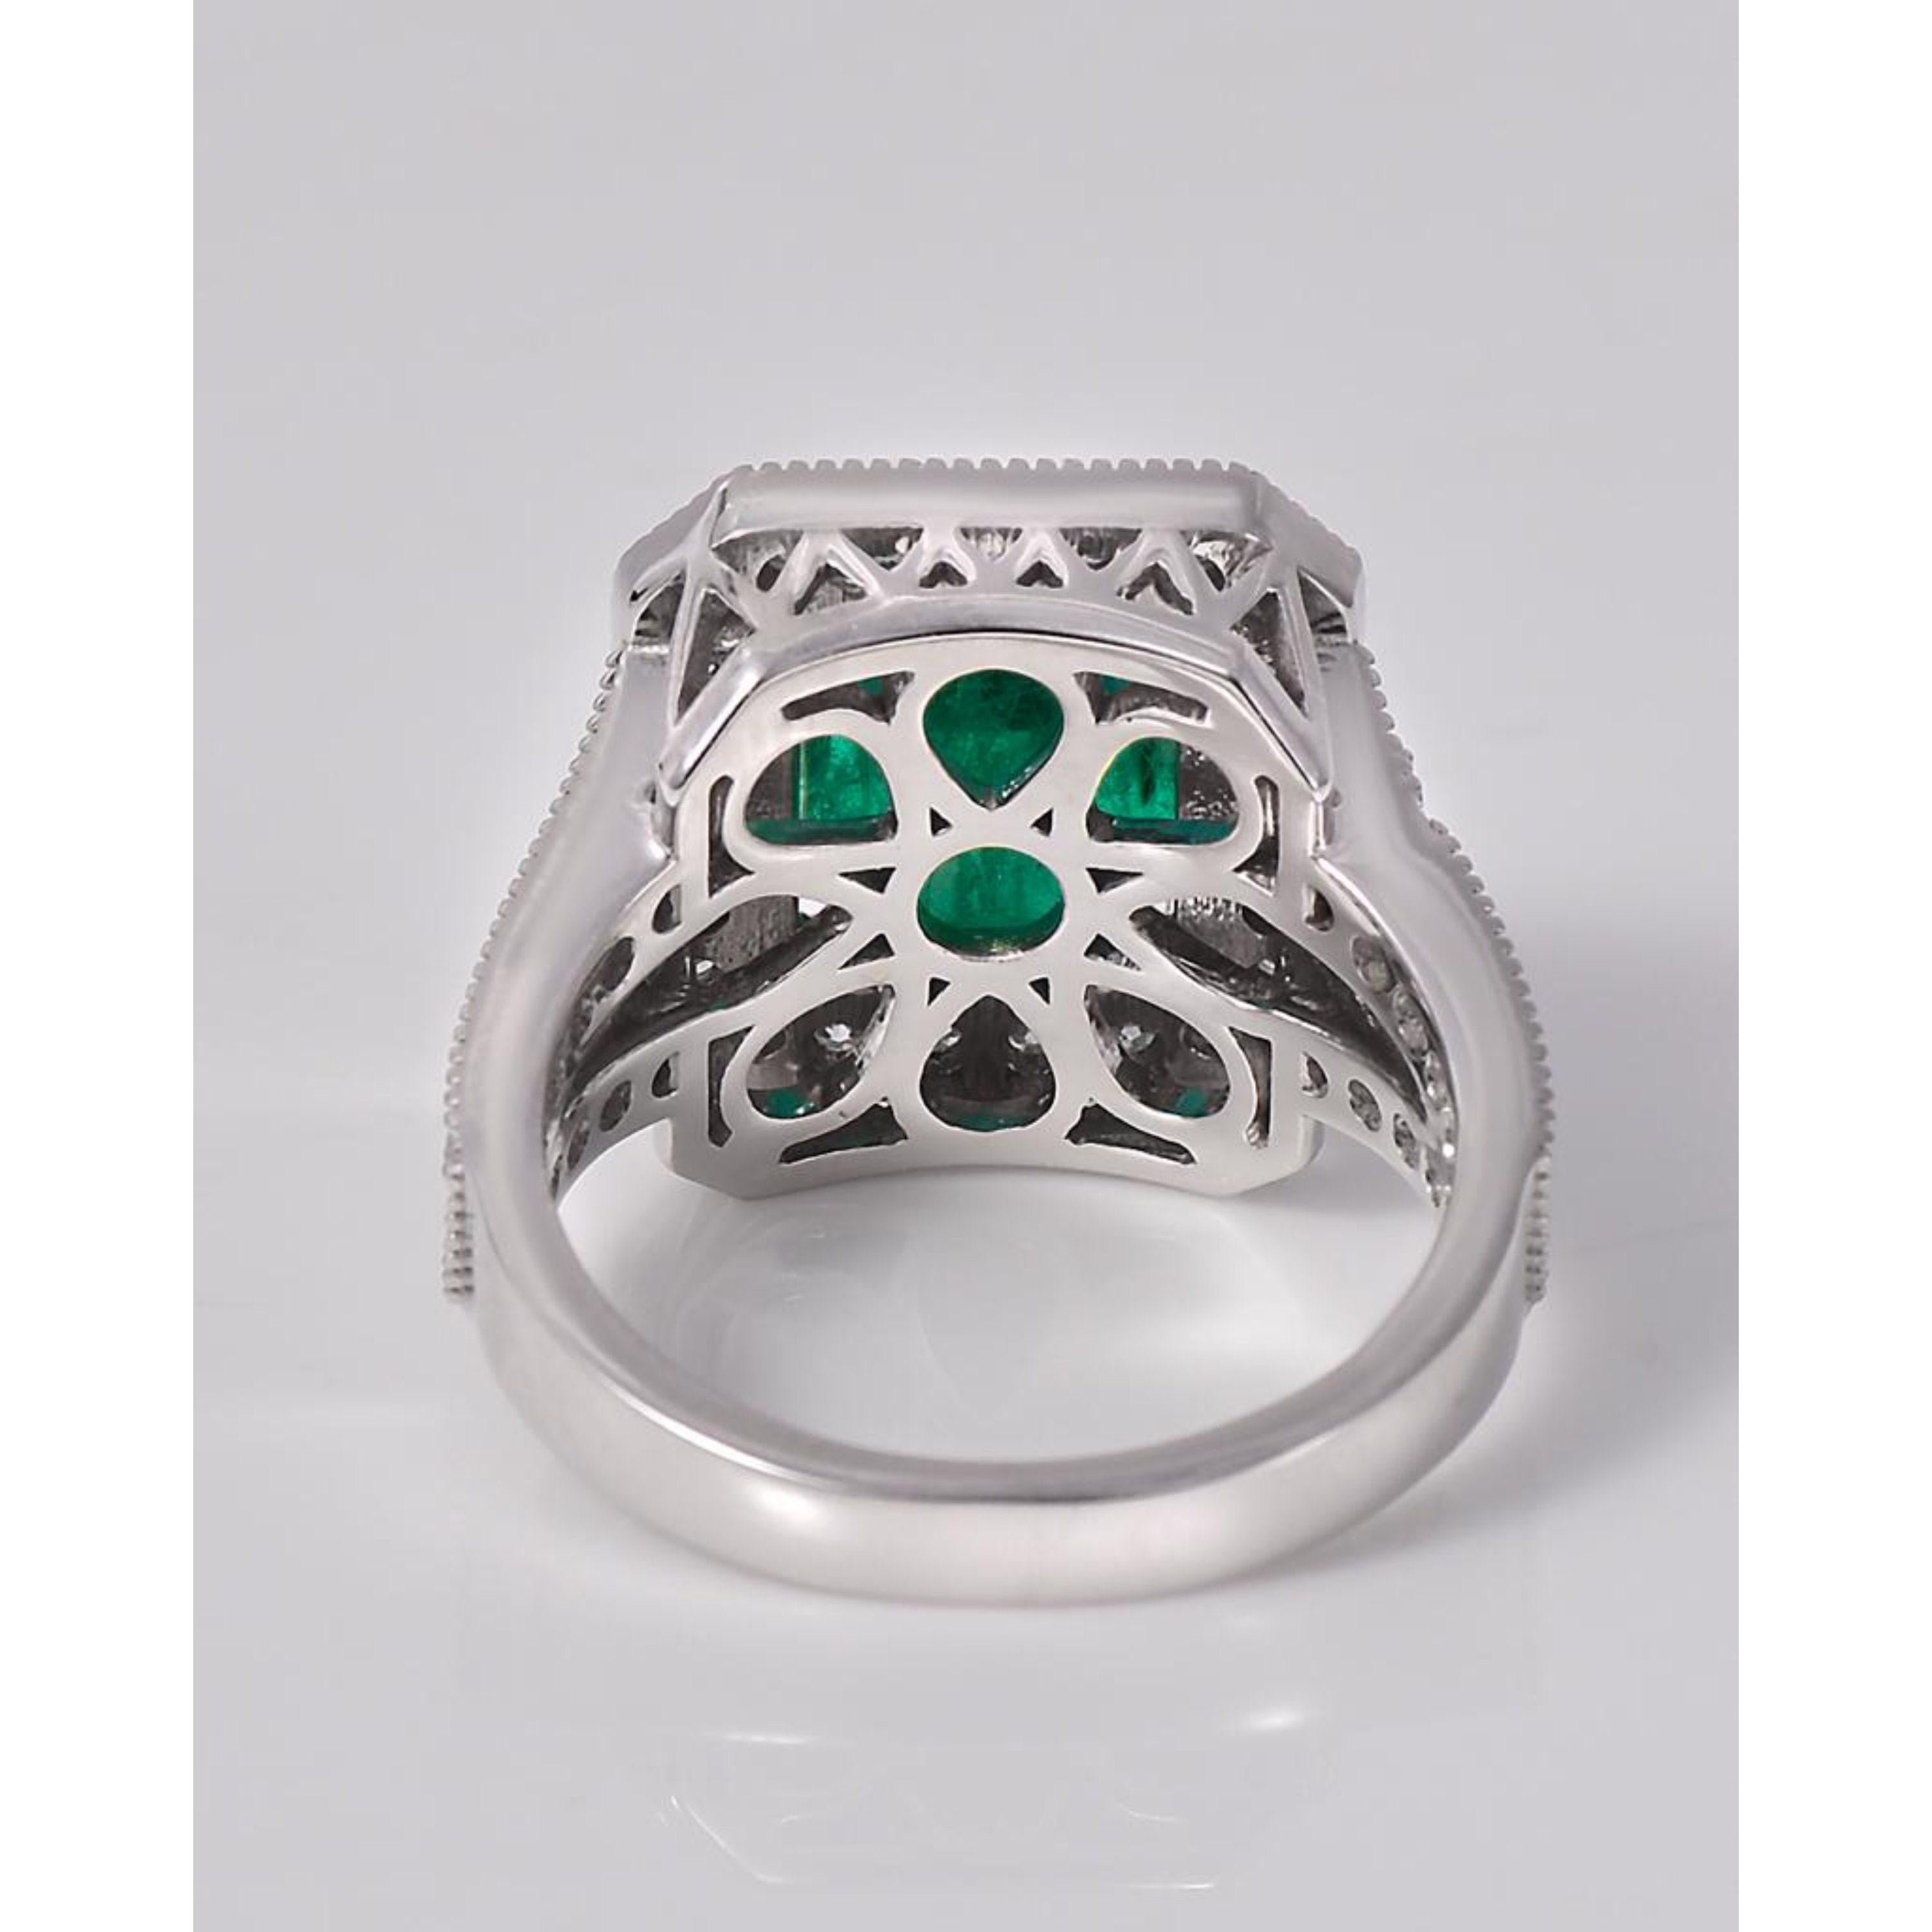 For Sale:  4 Carat Cushion Cut Halo Emerald Engagement Ring Art Deco Diamond Wedding Ring 3